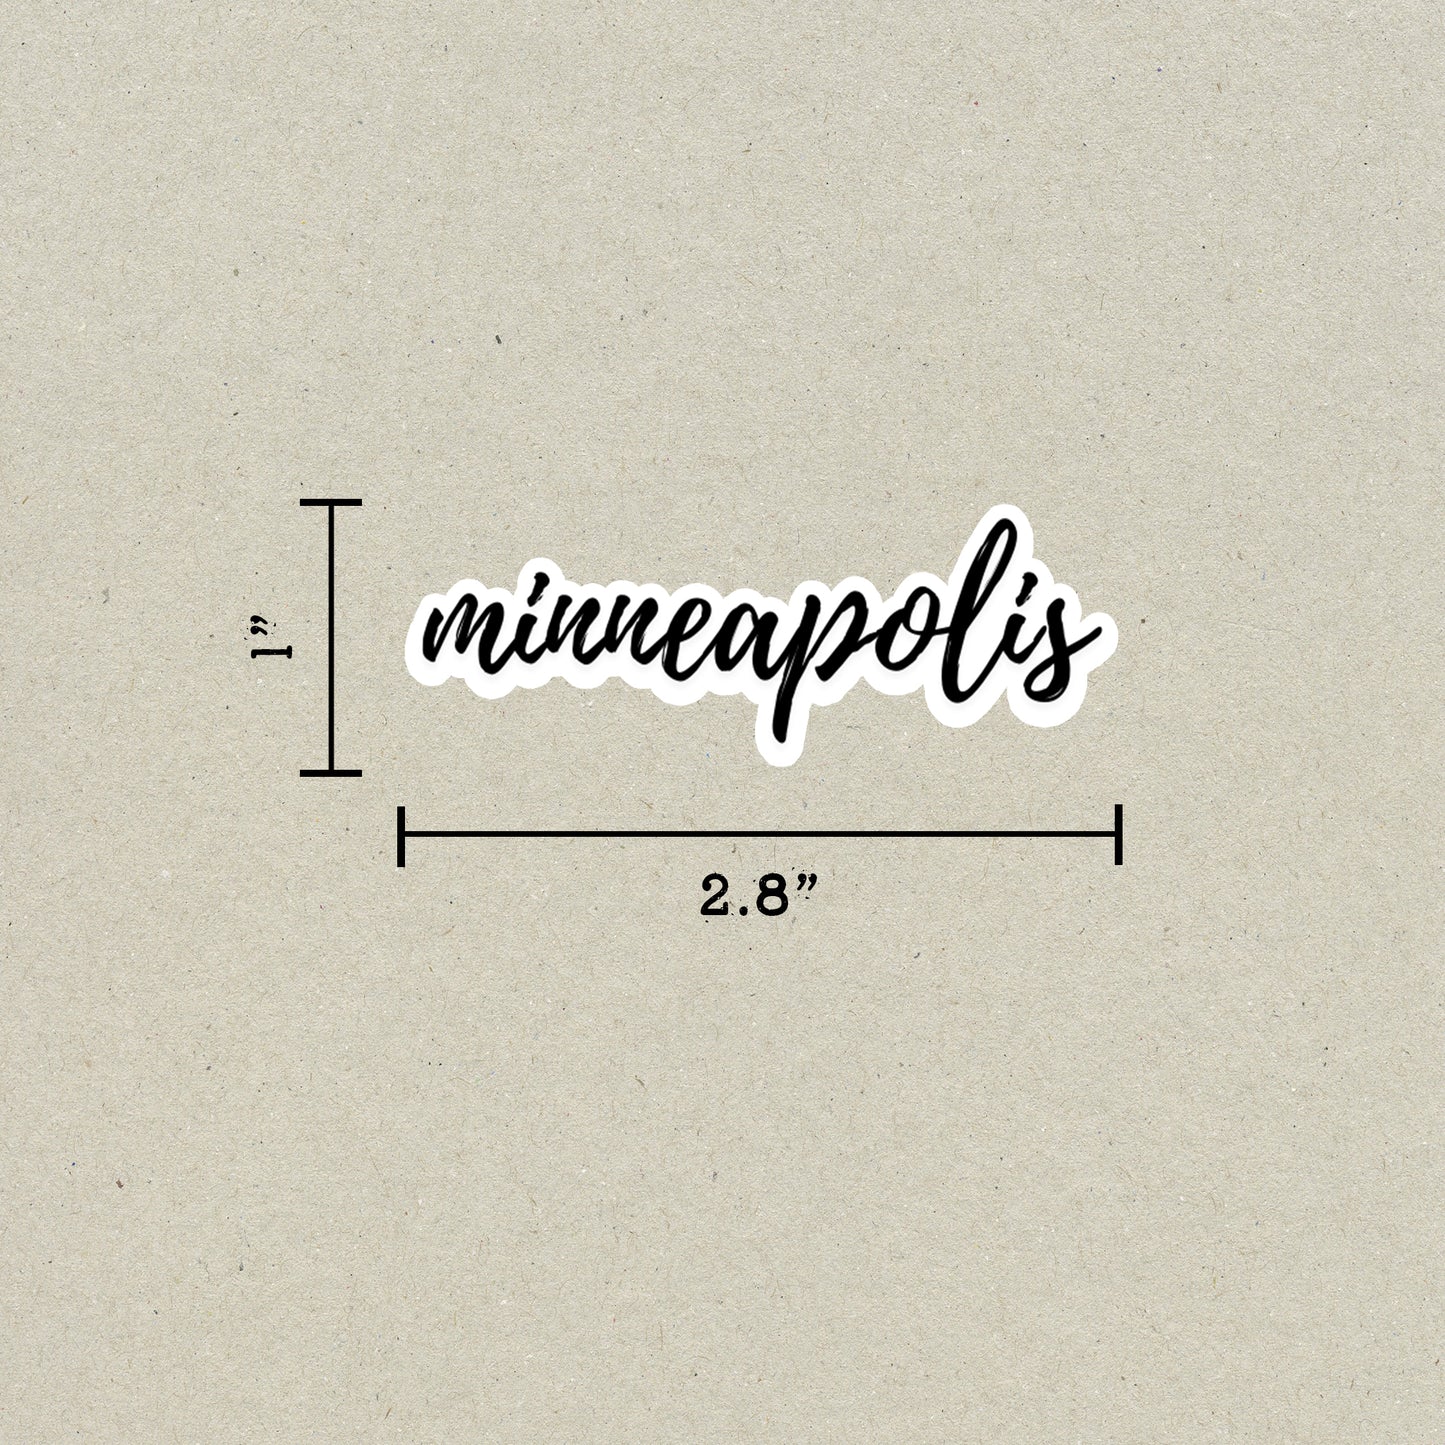 Minneapolis Cursive Sticker